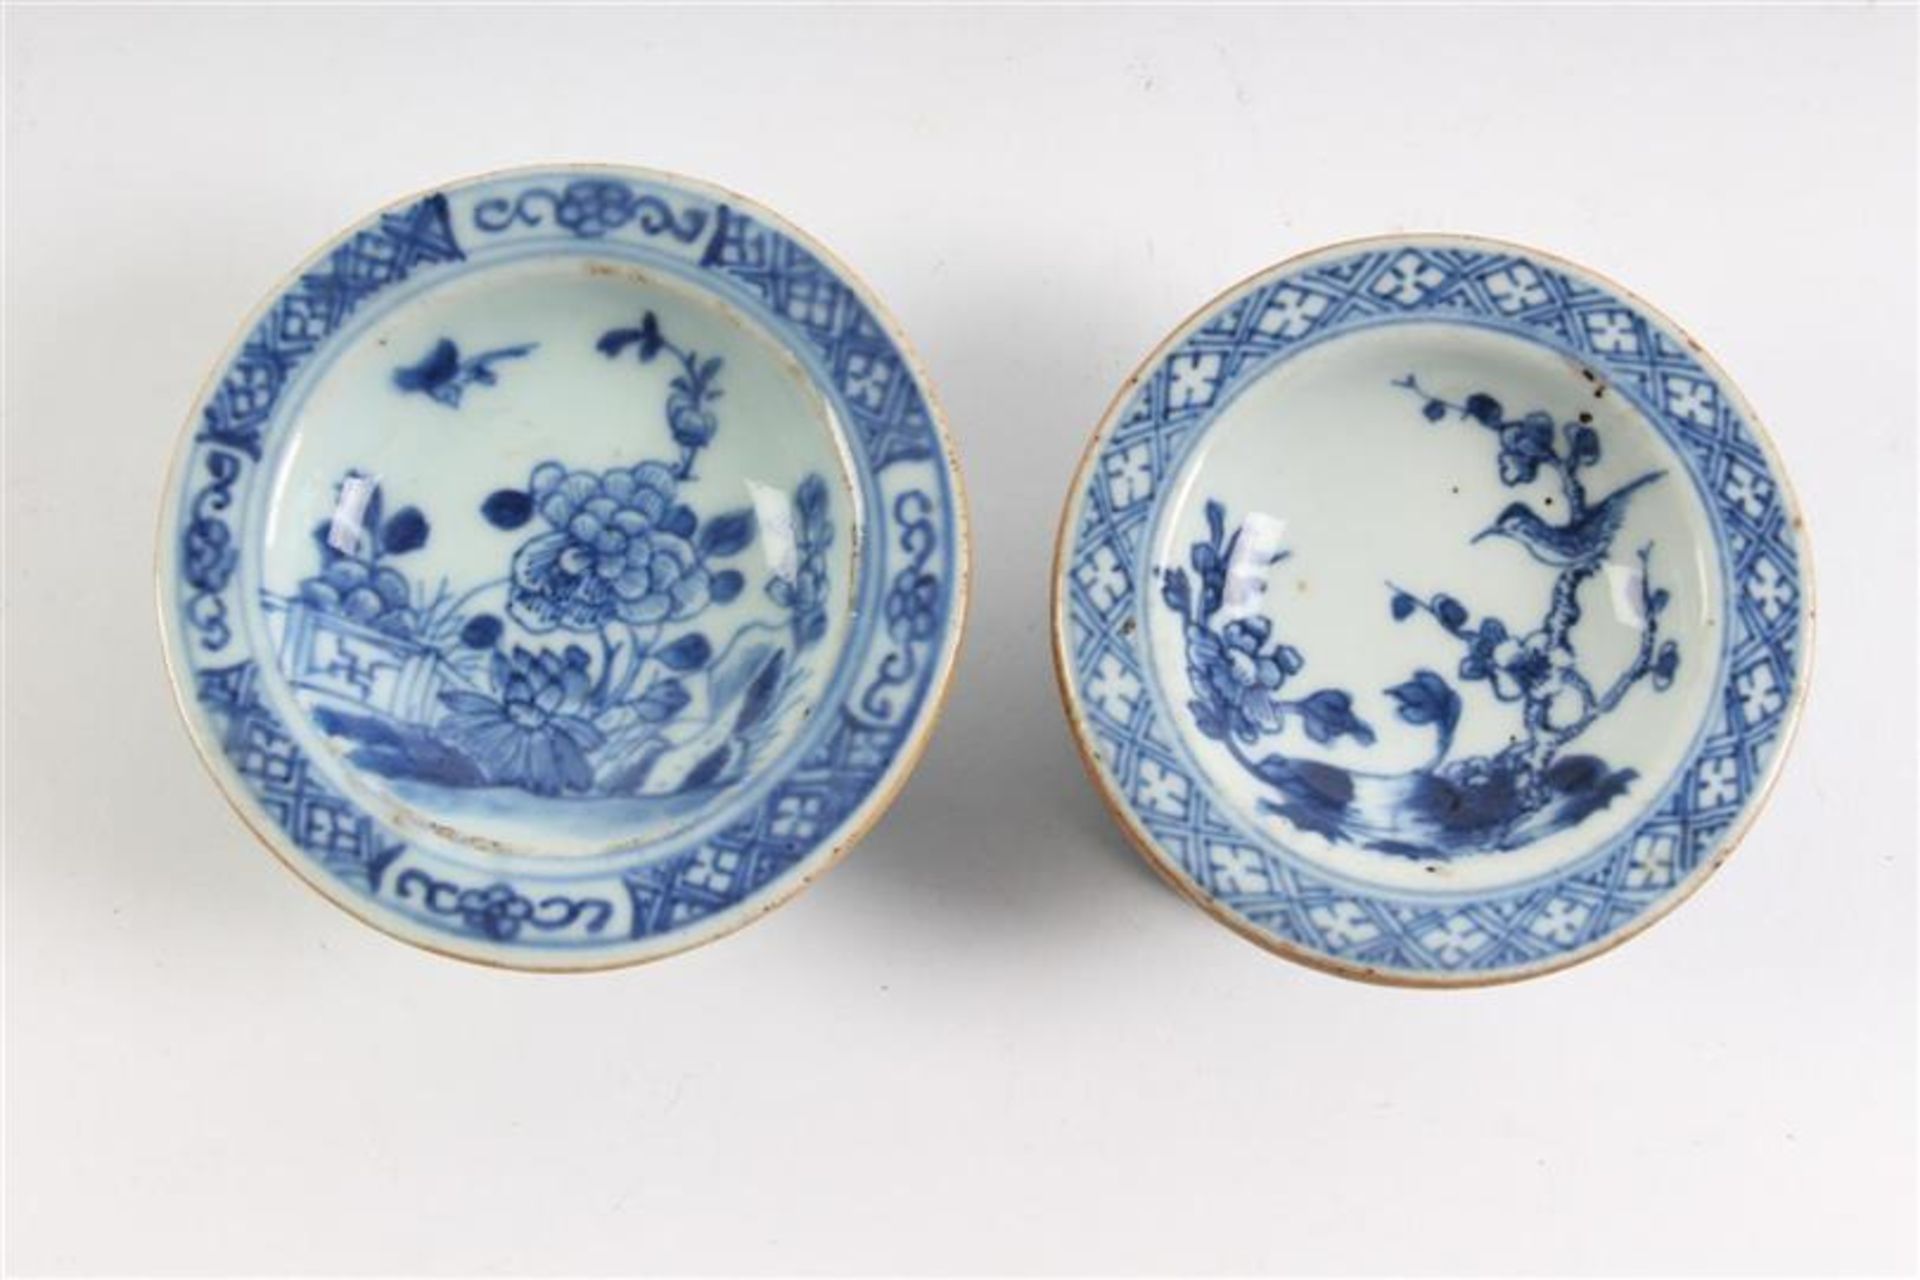 Twee porseleinen zoutvaten, China, 18e eeuw. HxD: 4 x 9.3 en 4.4 x 8.5 cm. - Bild 2 aus 4